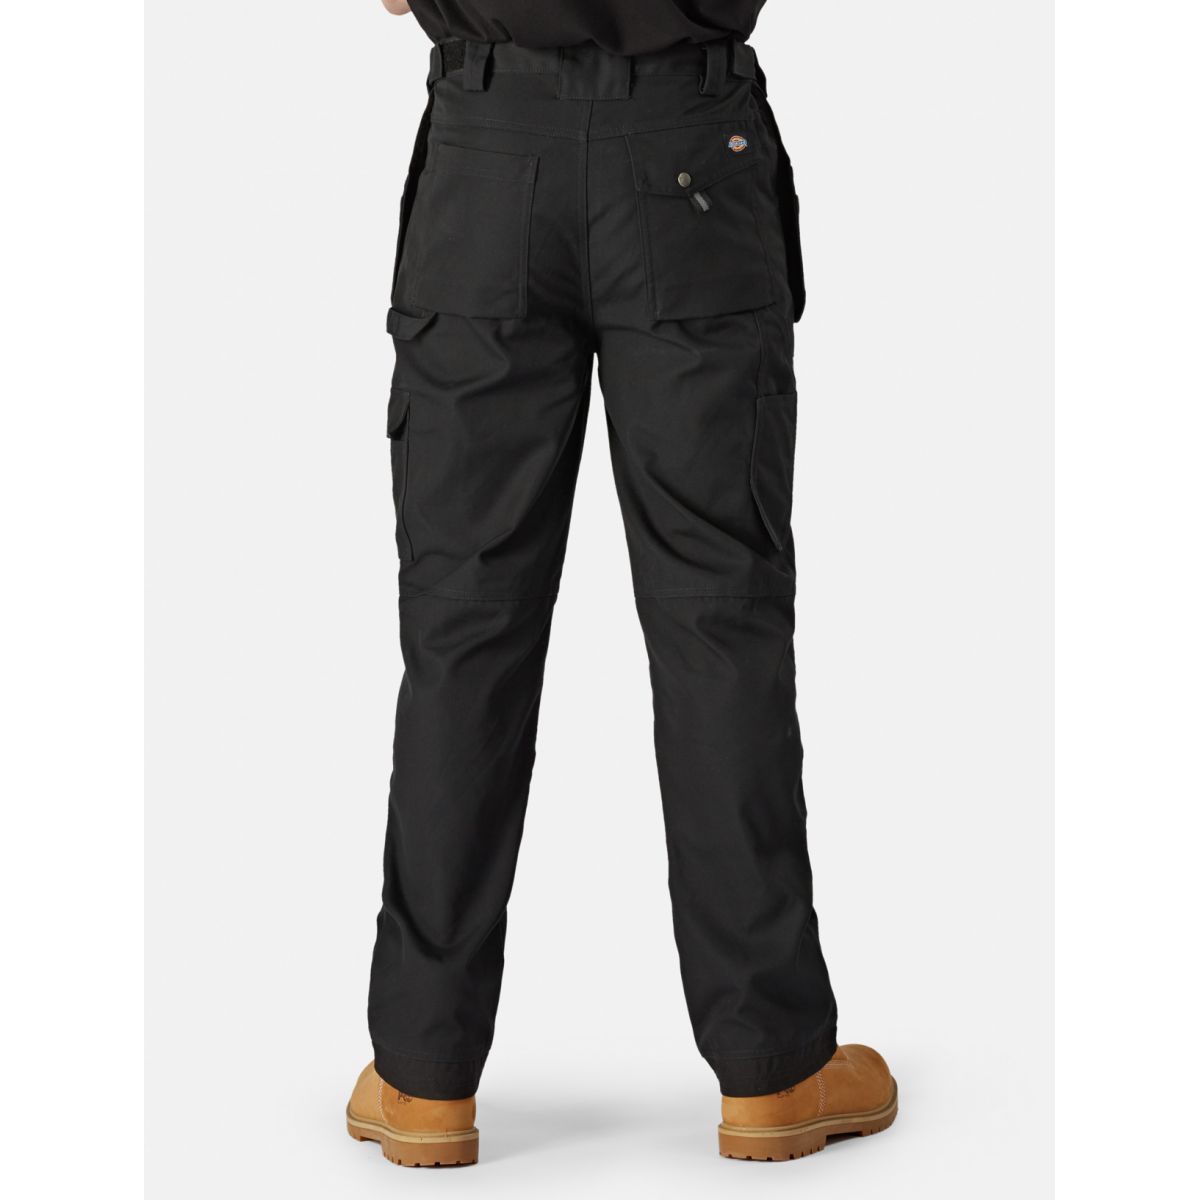 Pantalon Eisenhower multi-poches Noir - Dickies - Taille 46 1